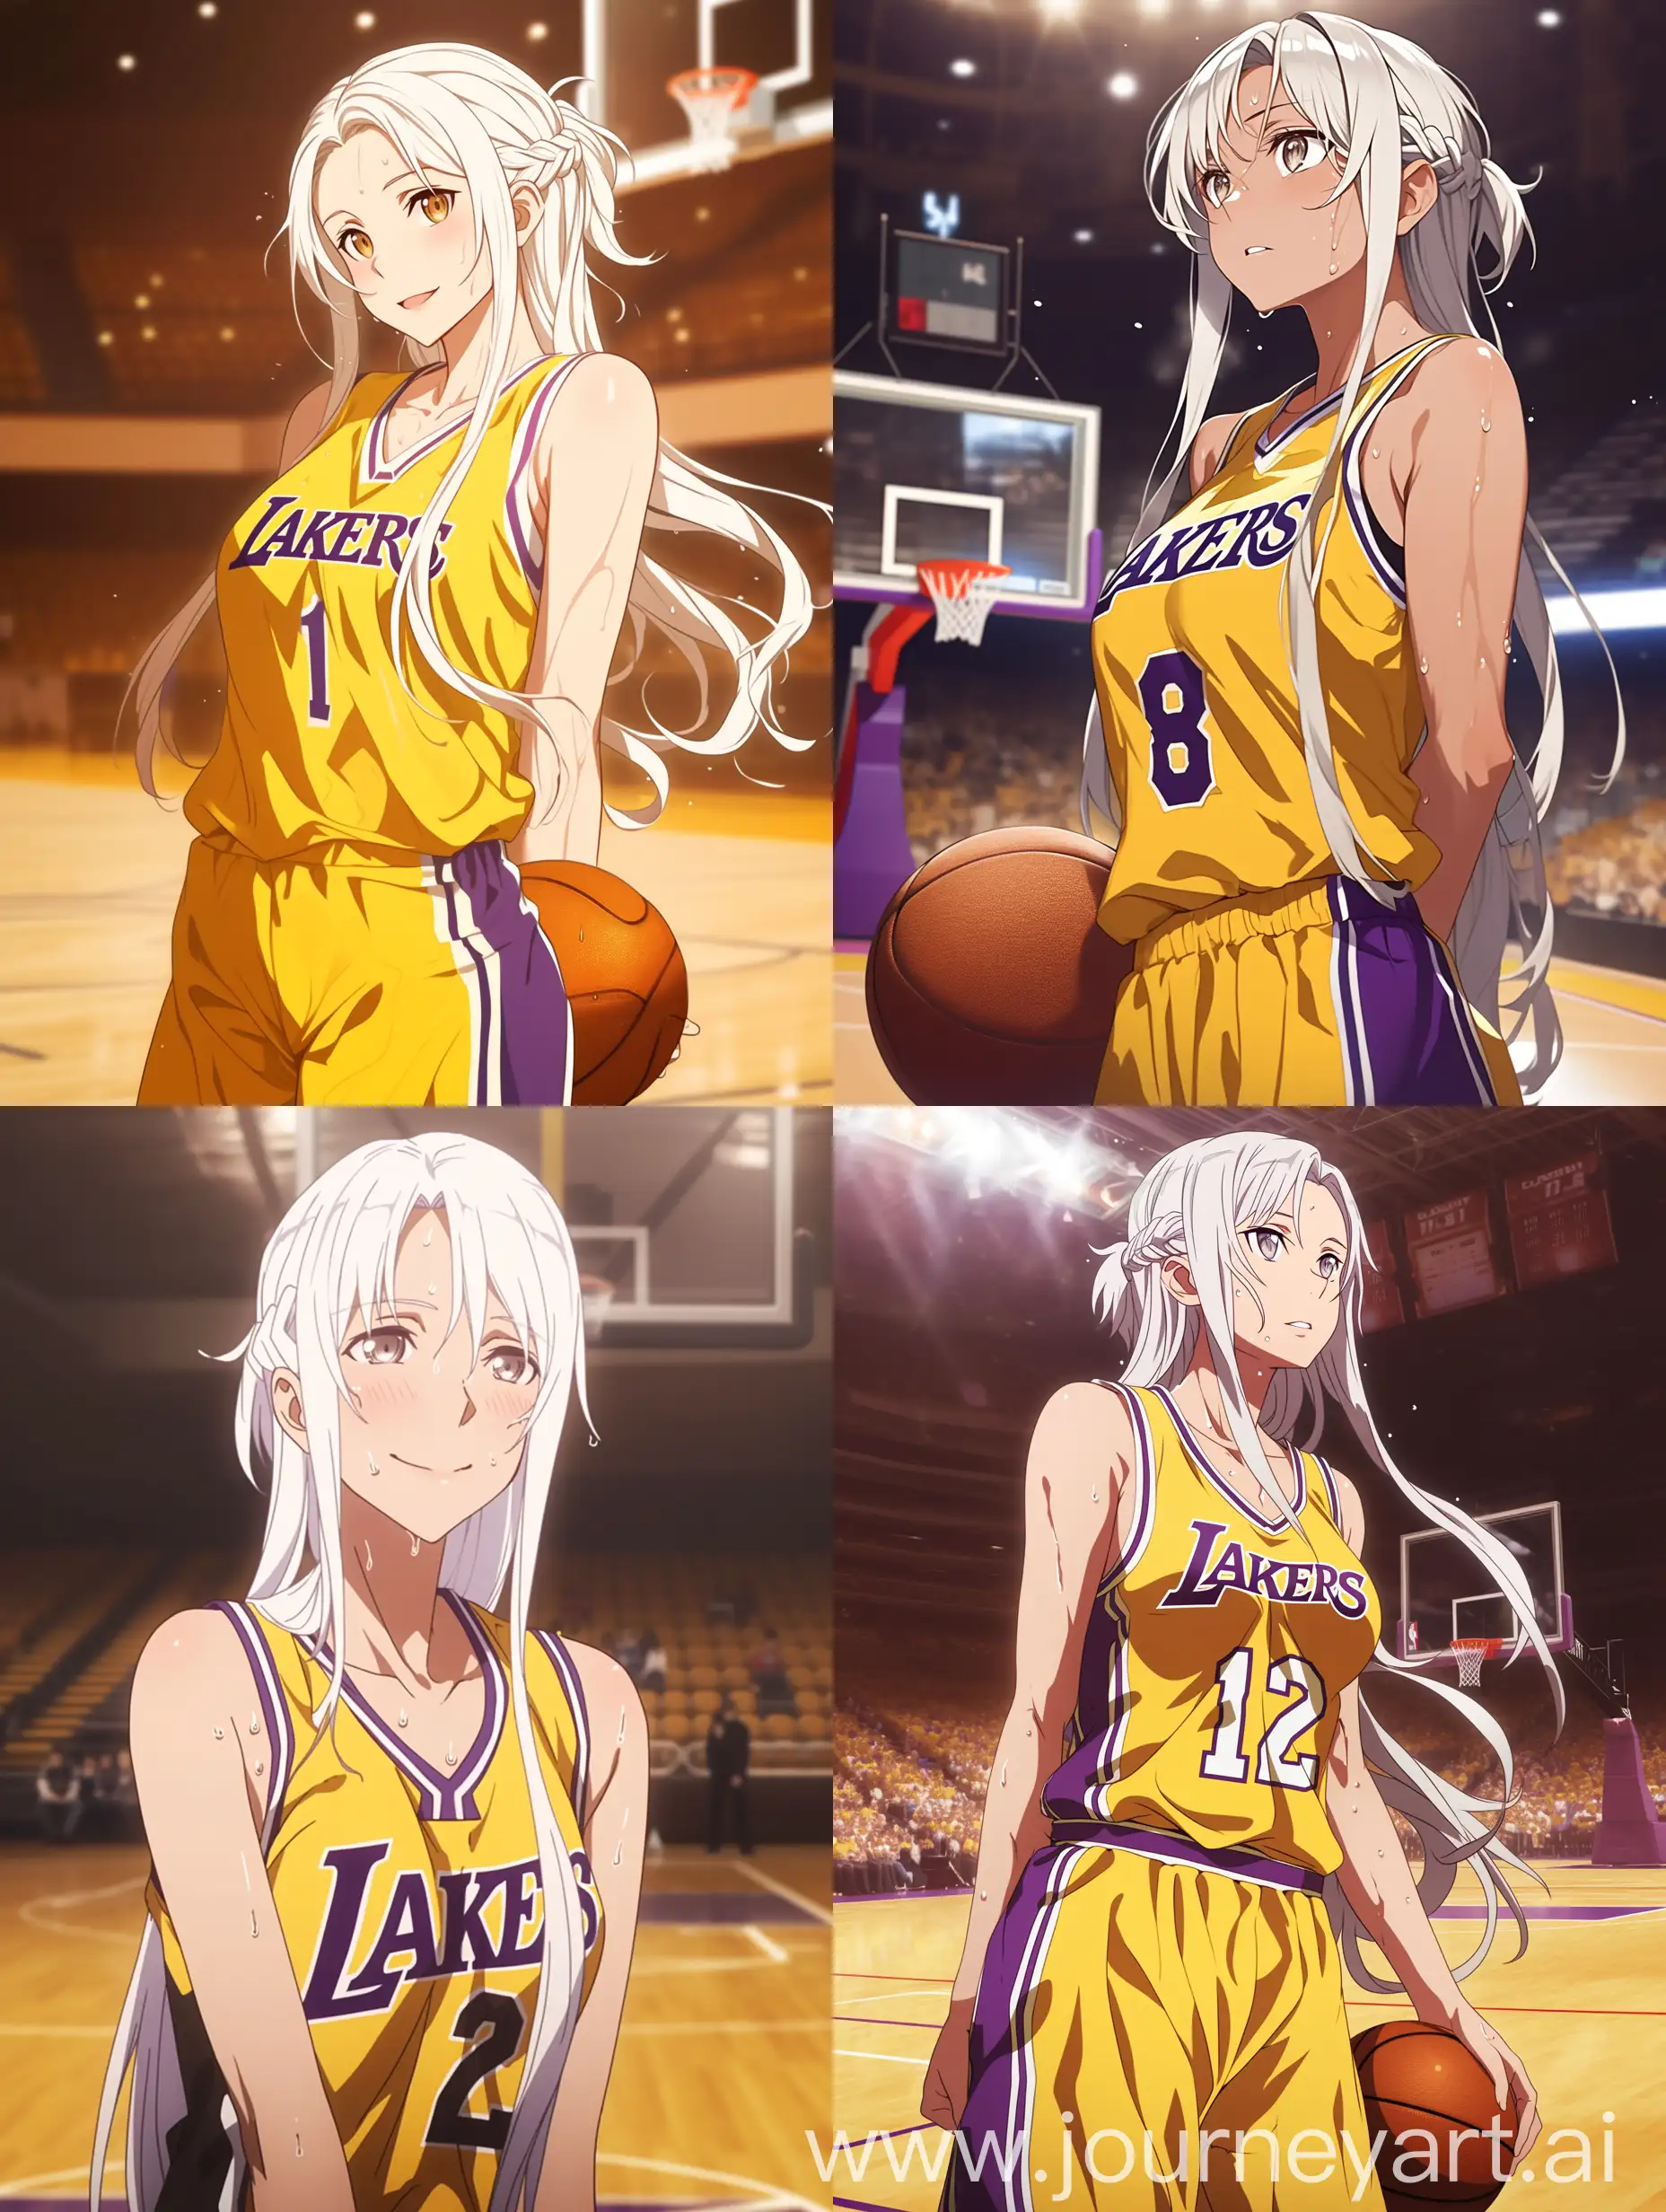 photo screenshot from anime, Girl, White hair, Asuna from sword art online, yellow basketball uniform "LAKERS", sweat, basketball court --niji 6